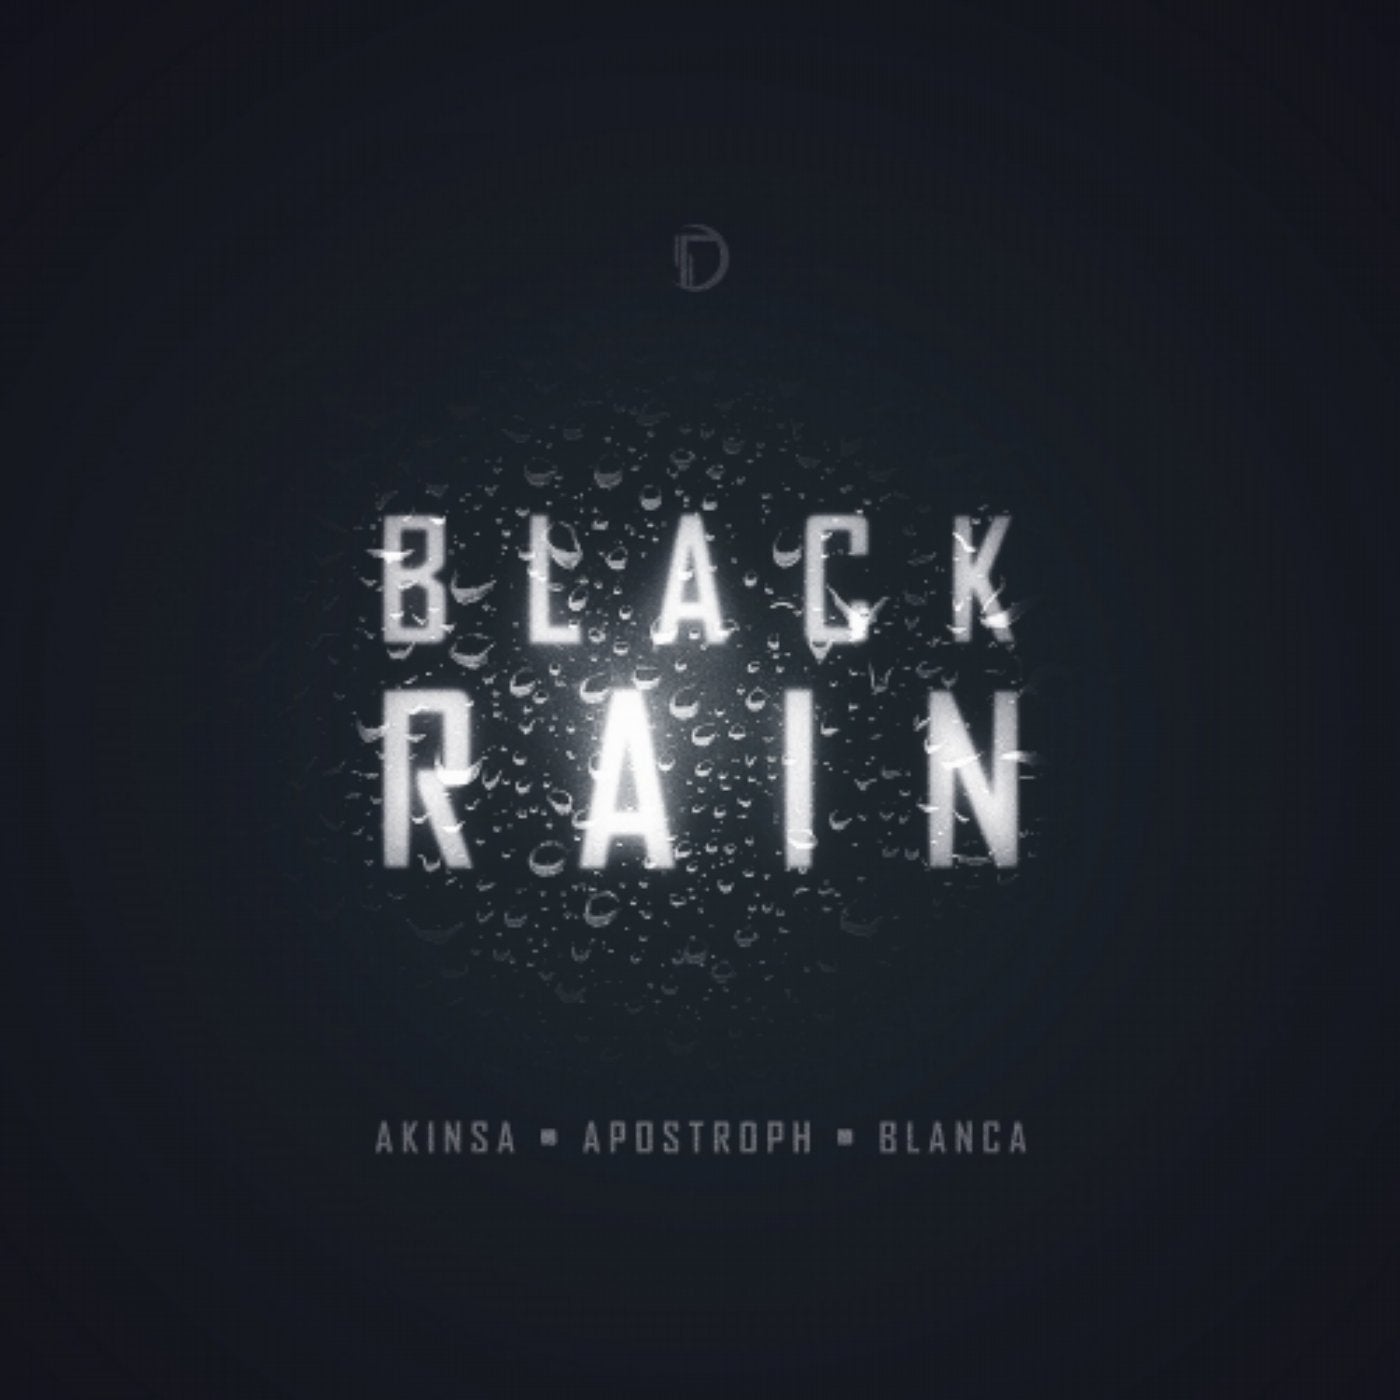 Black Rain EP